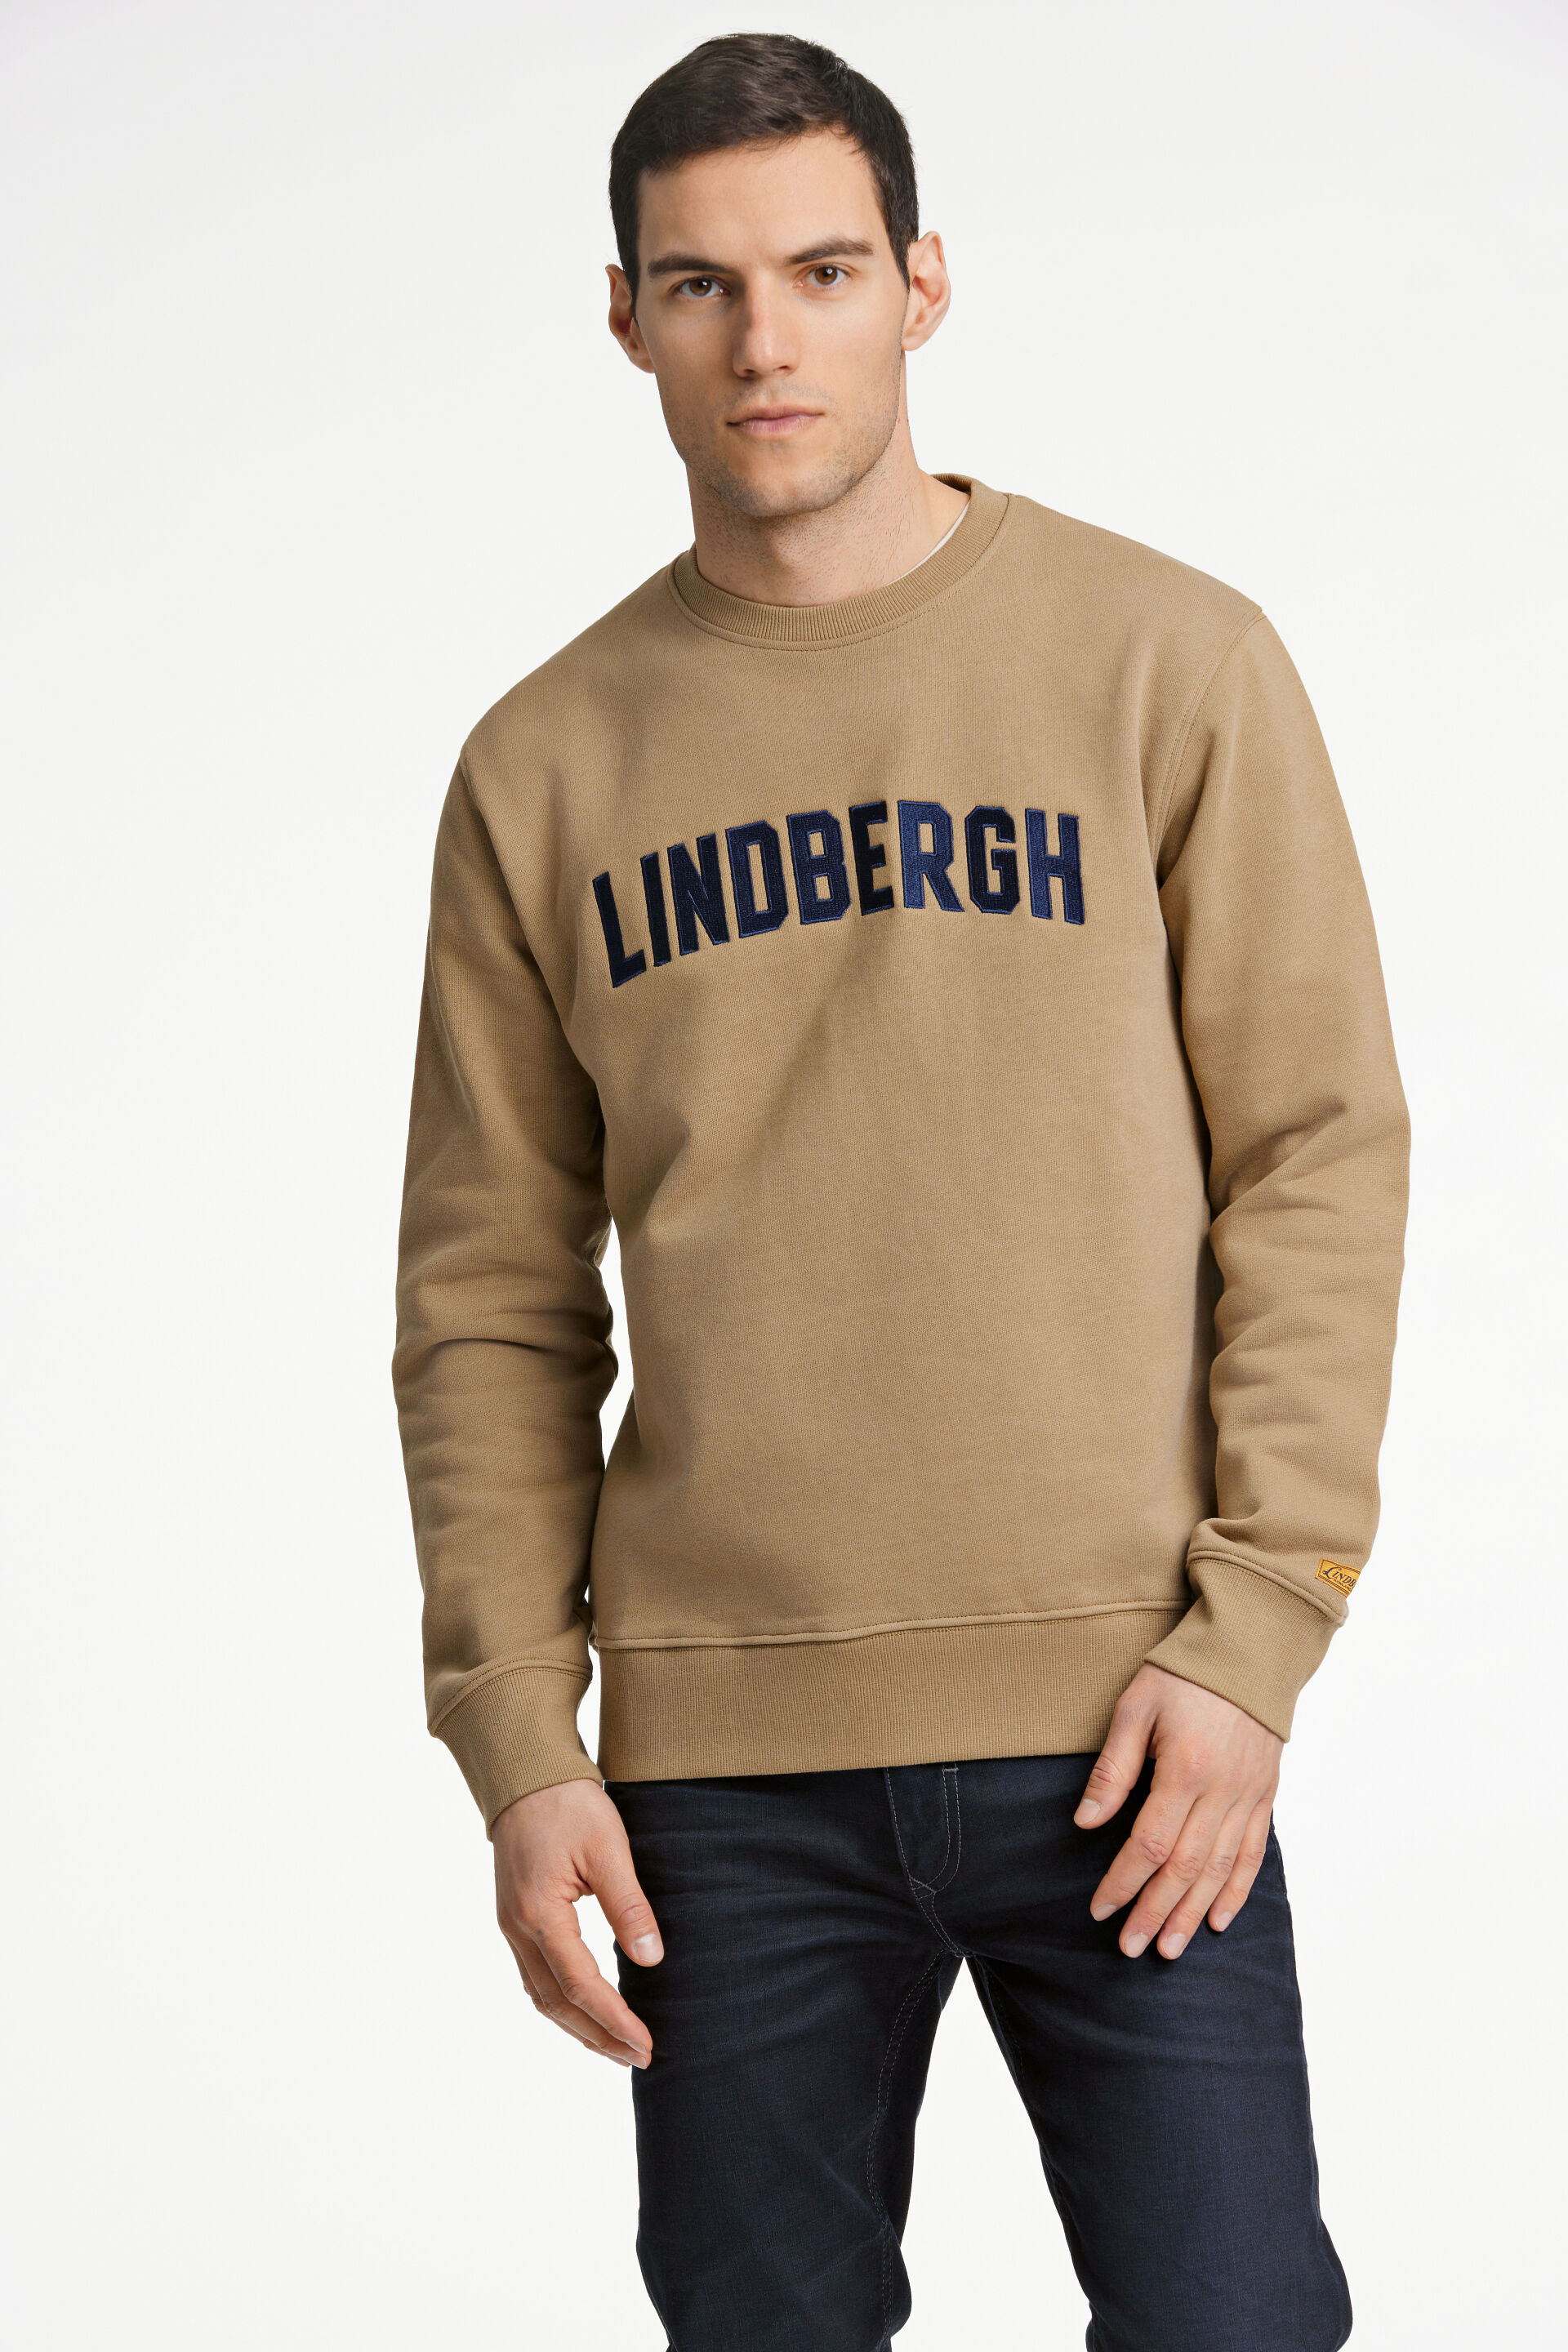 Lindbergh  Sweatshirt Sand 30-724050